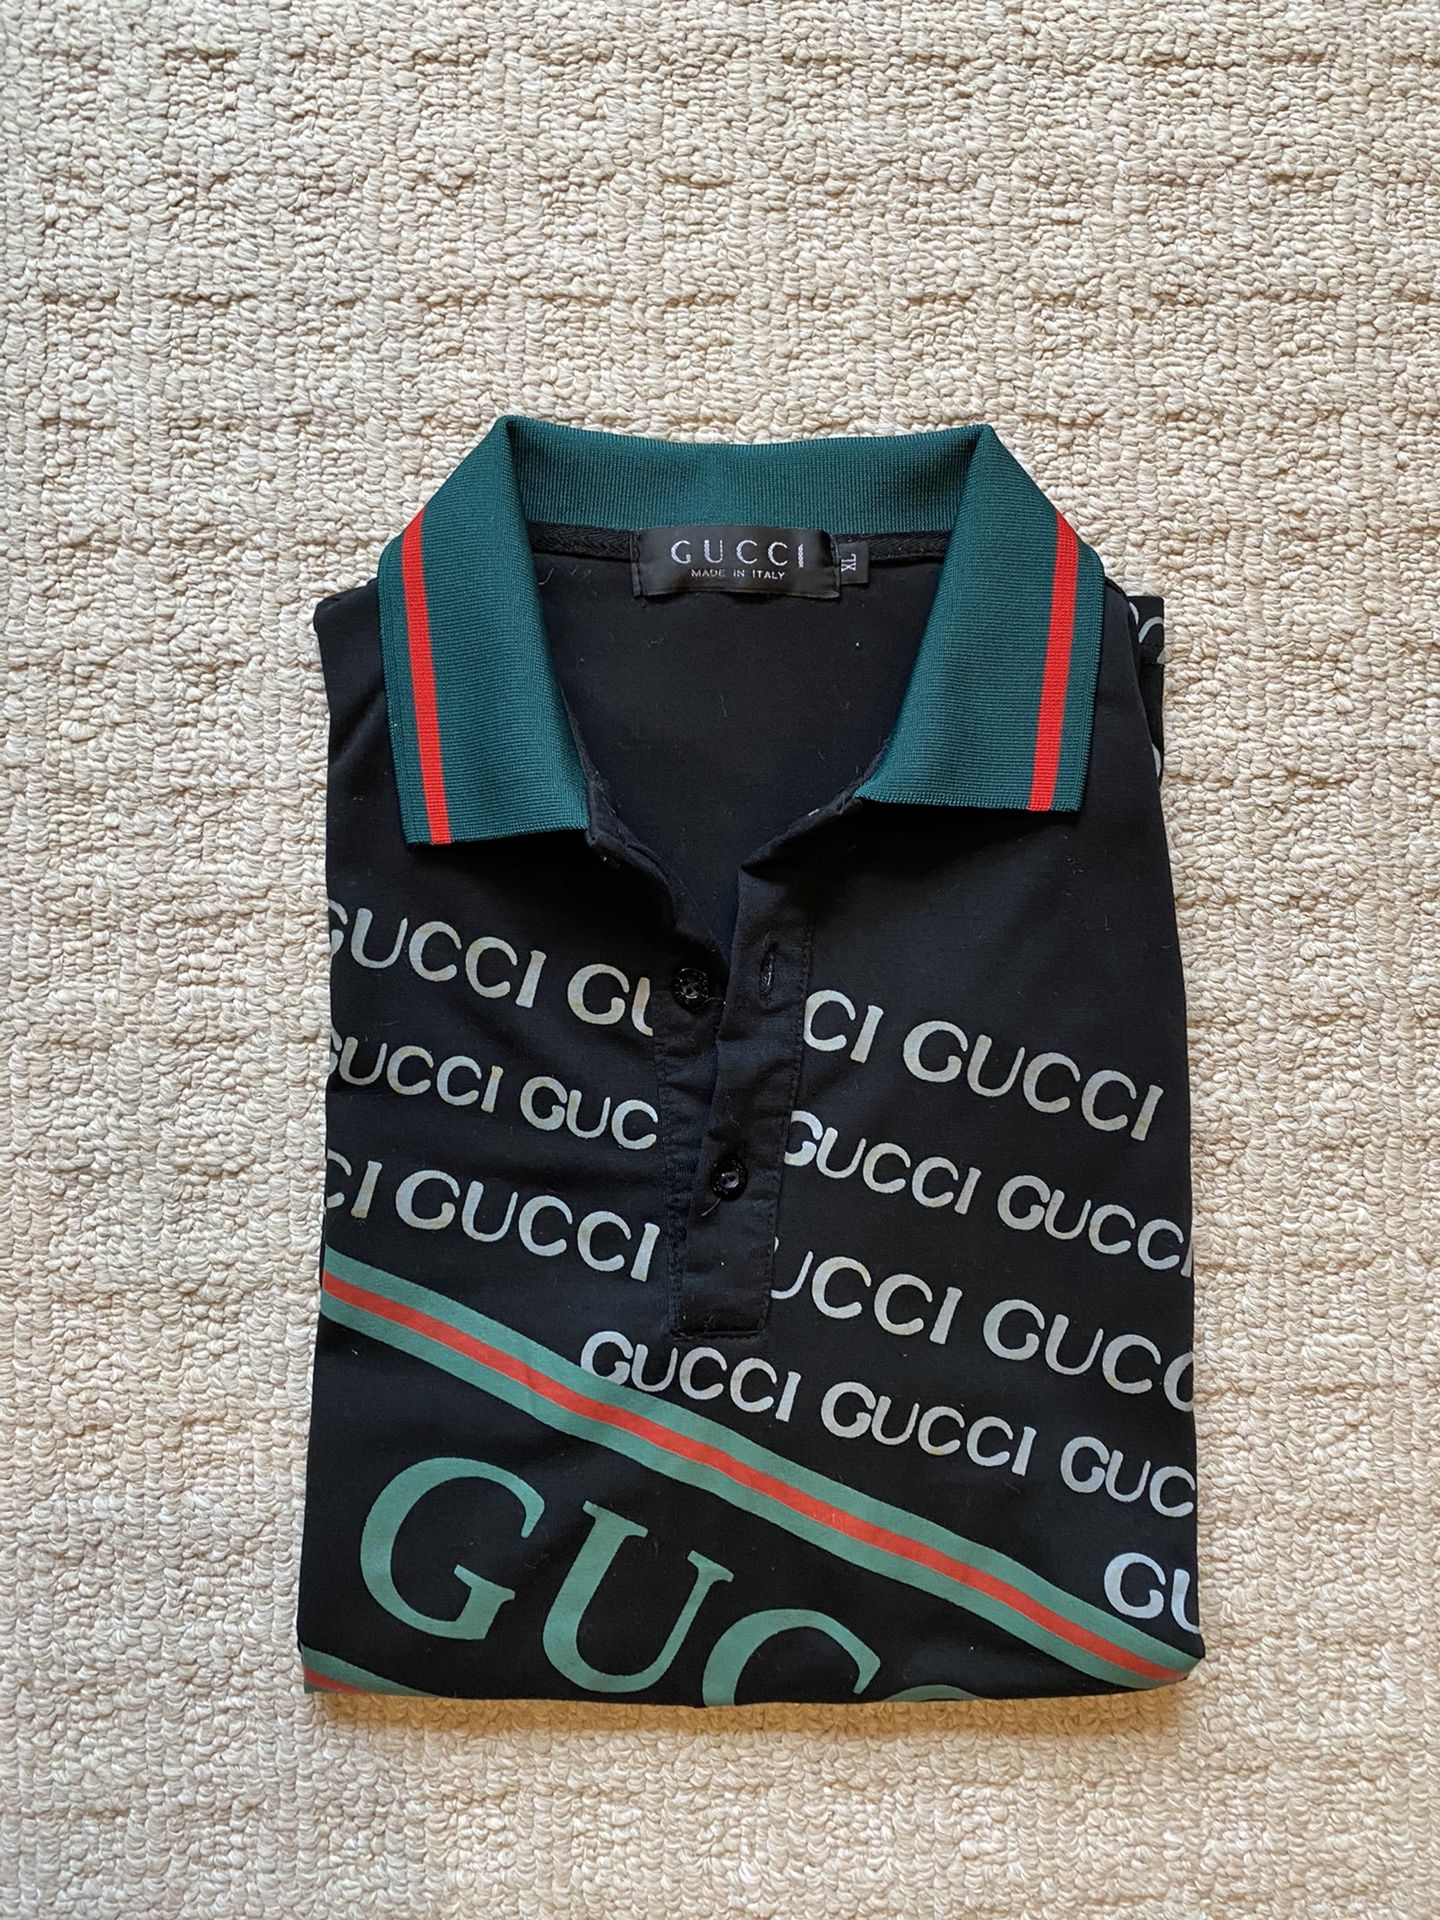 Gucci polo (size XL)